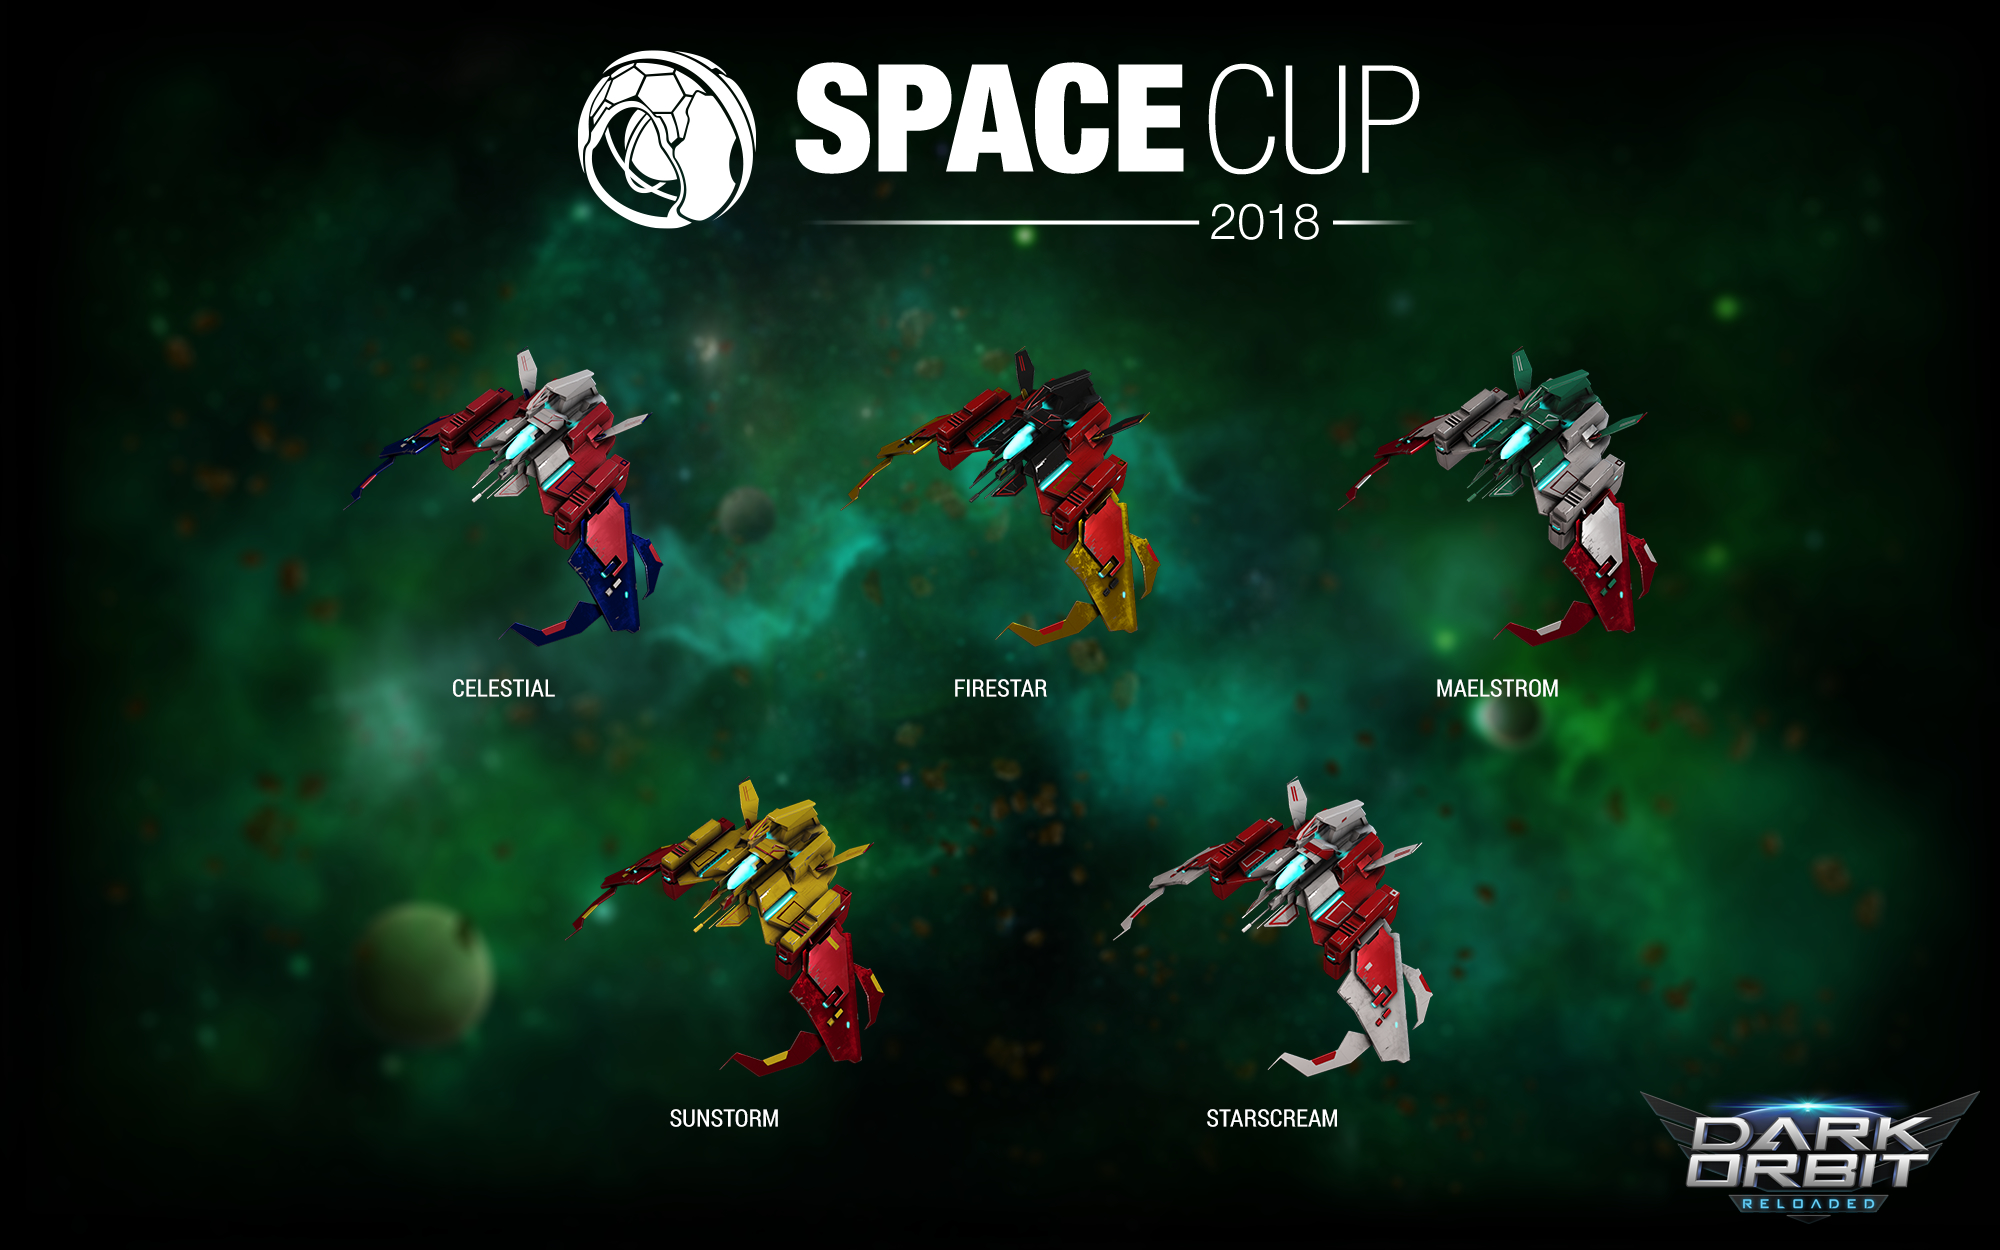 spacecup-2018_ships_2000x1250.jpg